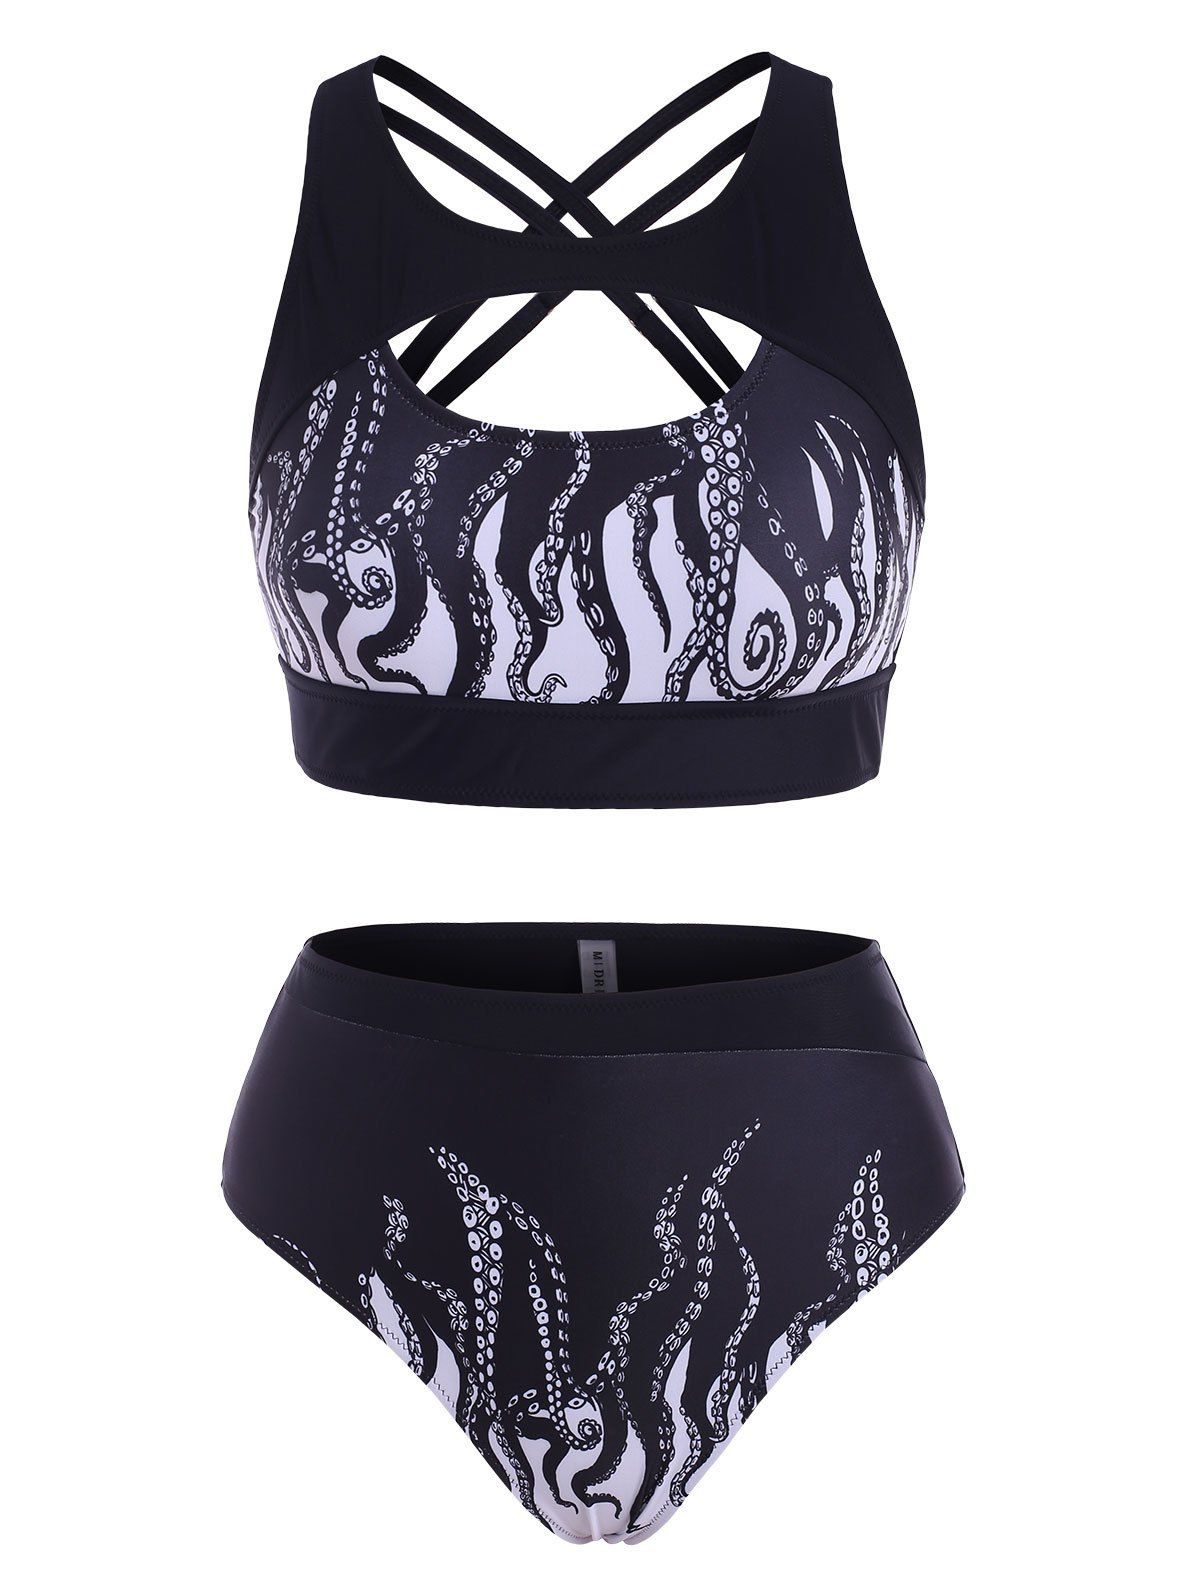 Beach Cutout Swimsuit Criss Cross Octopus Print Tankini Swimwear - BLACK M